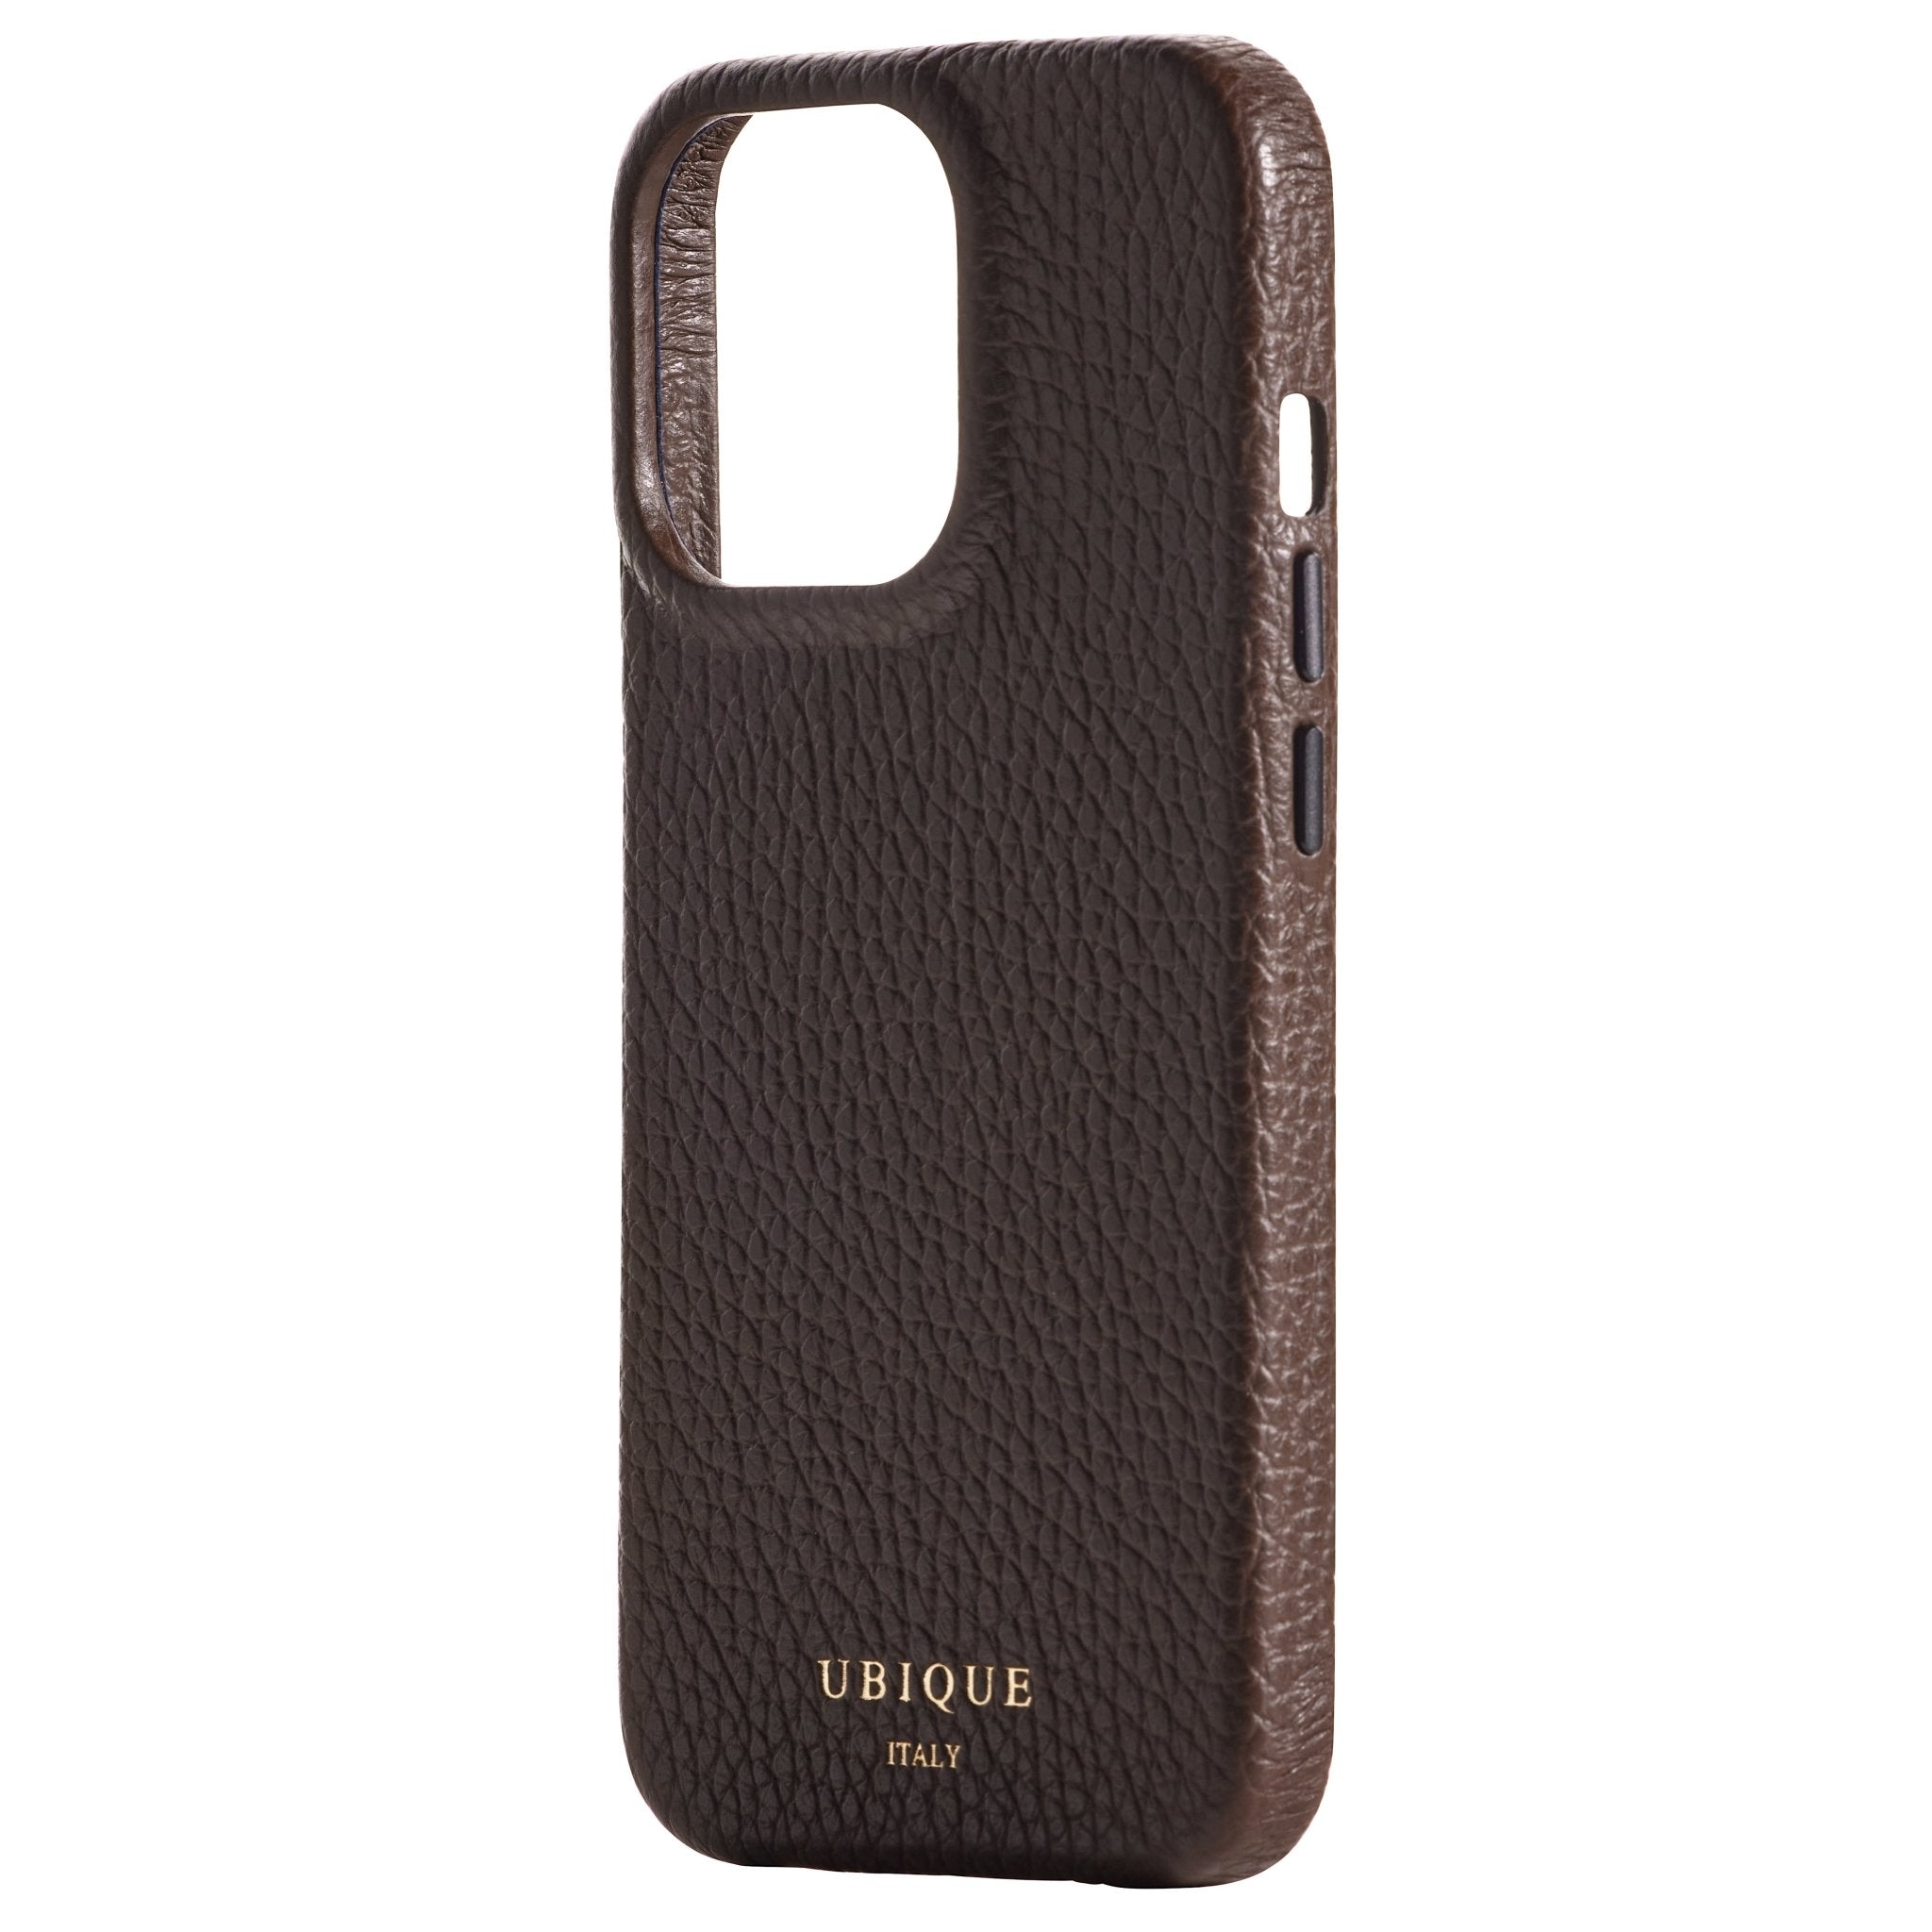 Ubique Italy Luxury iPhone Case 14 Pebble Grain Leather Dark Walnut Angled